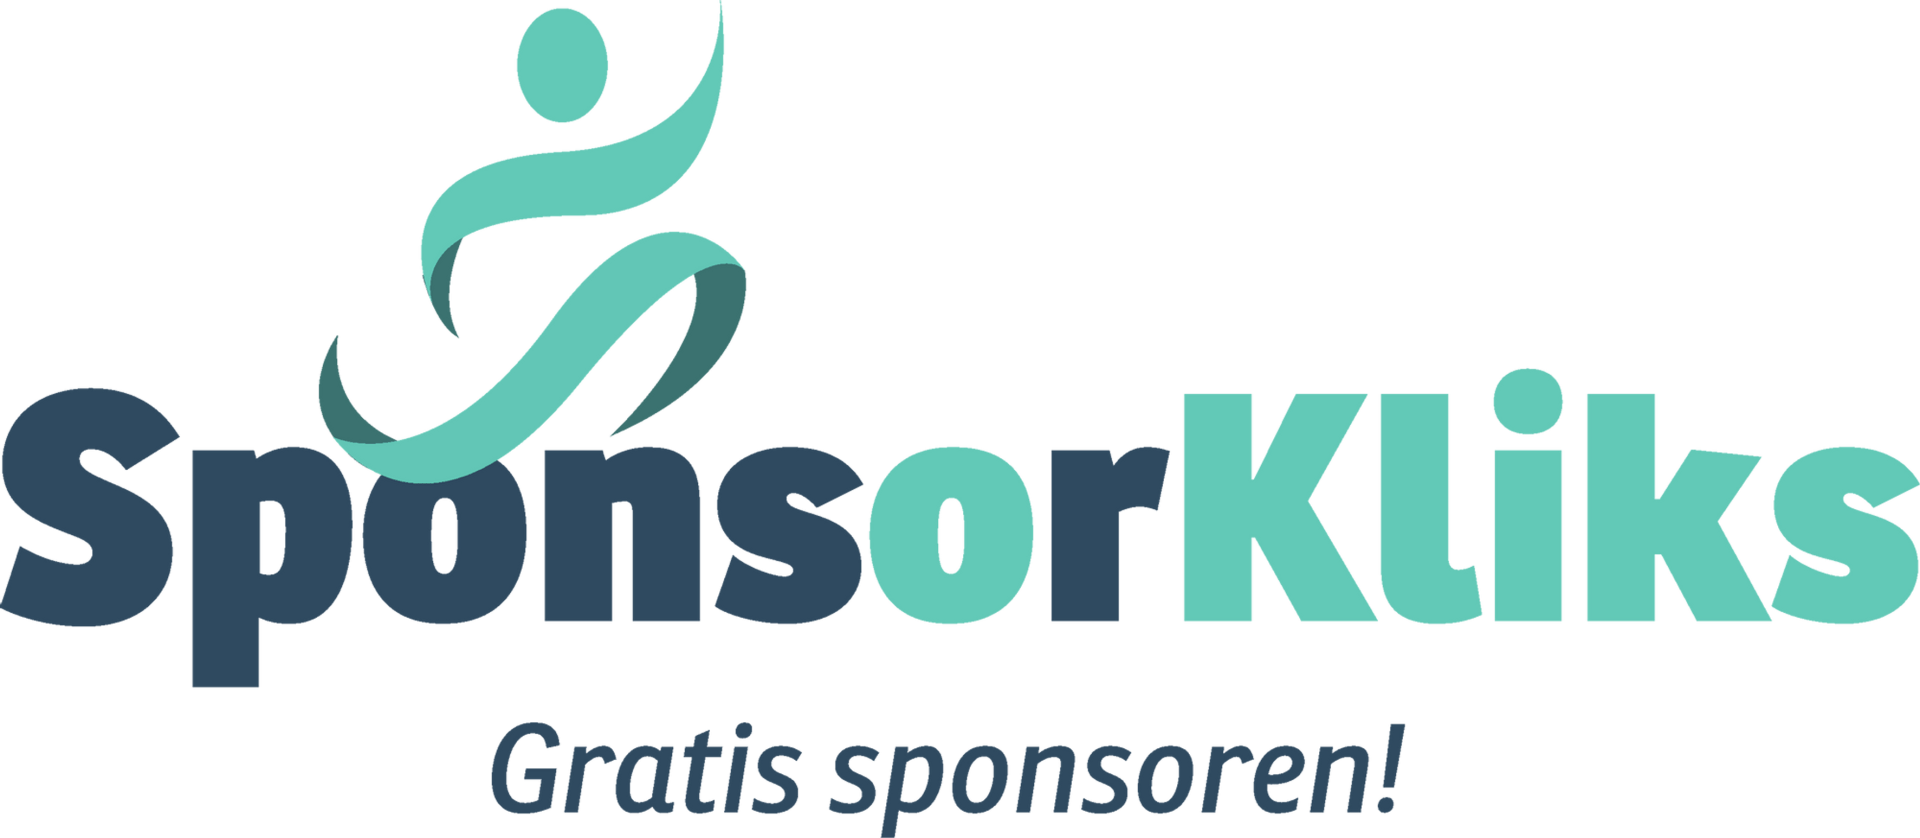 sponsorkliks.nl